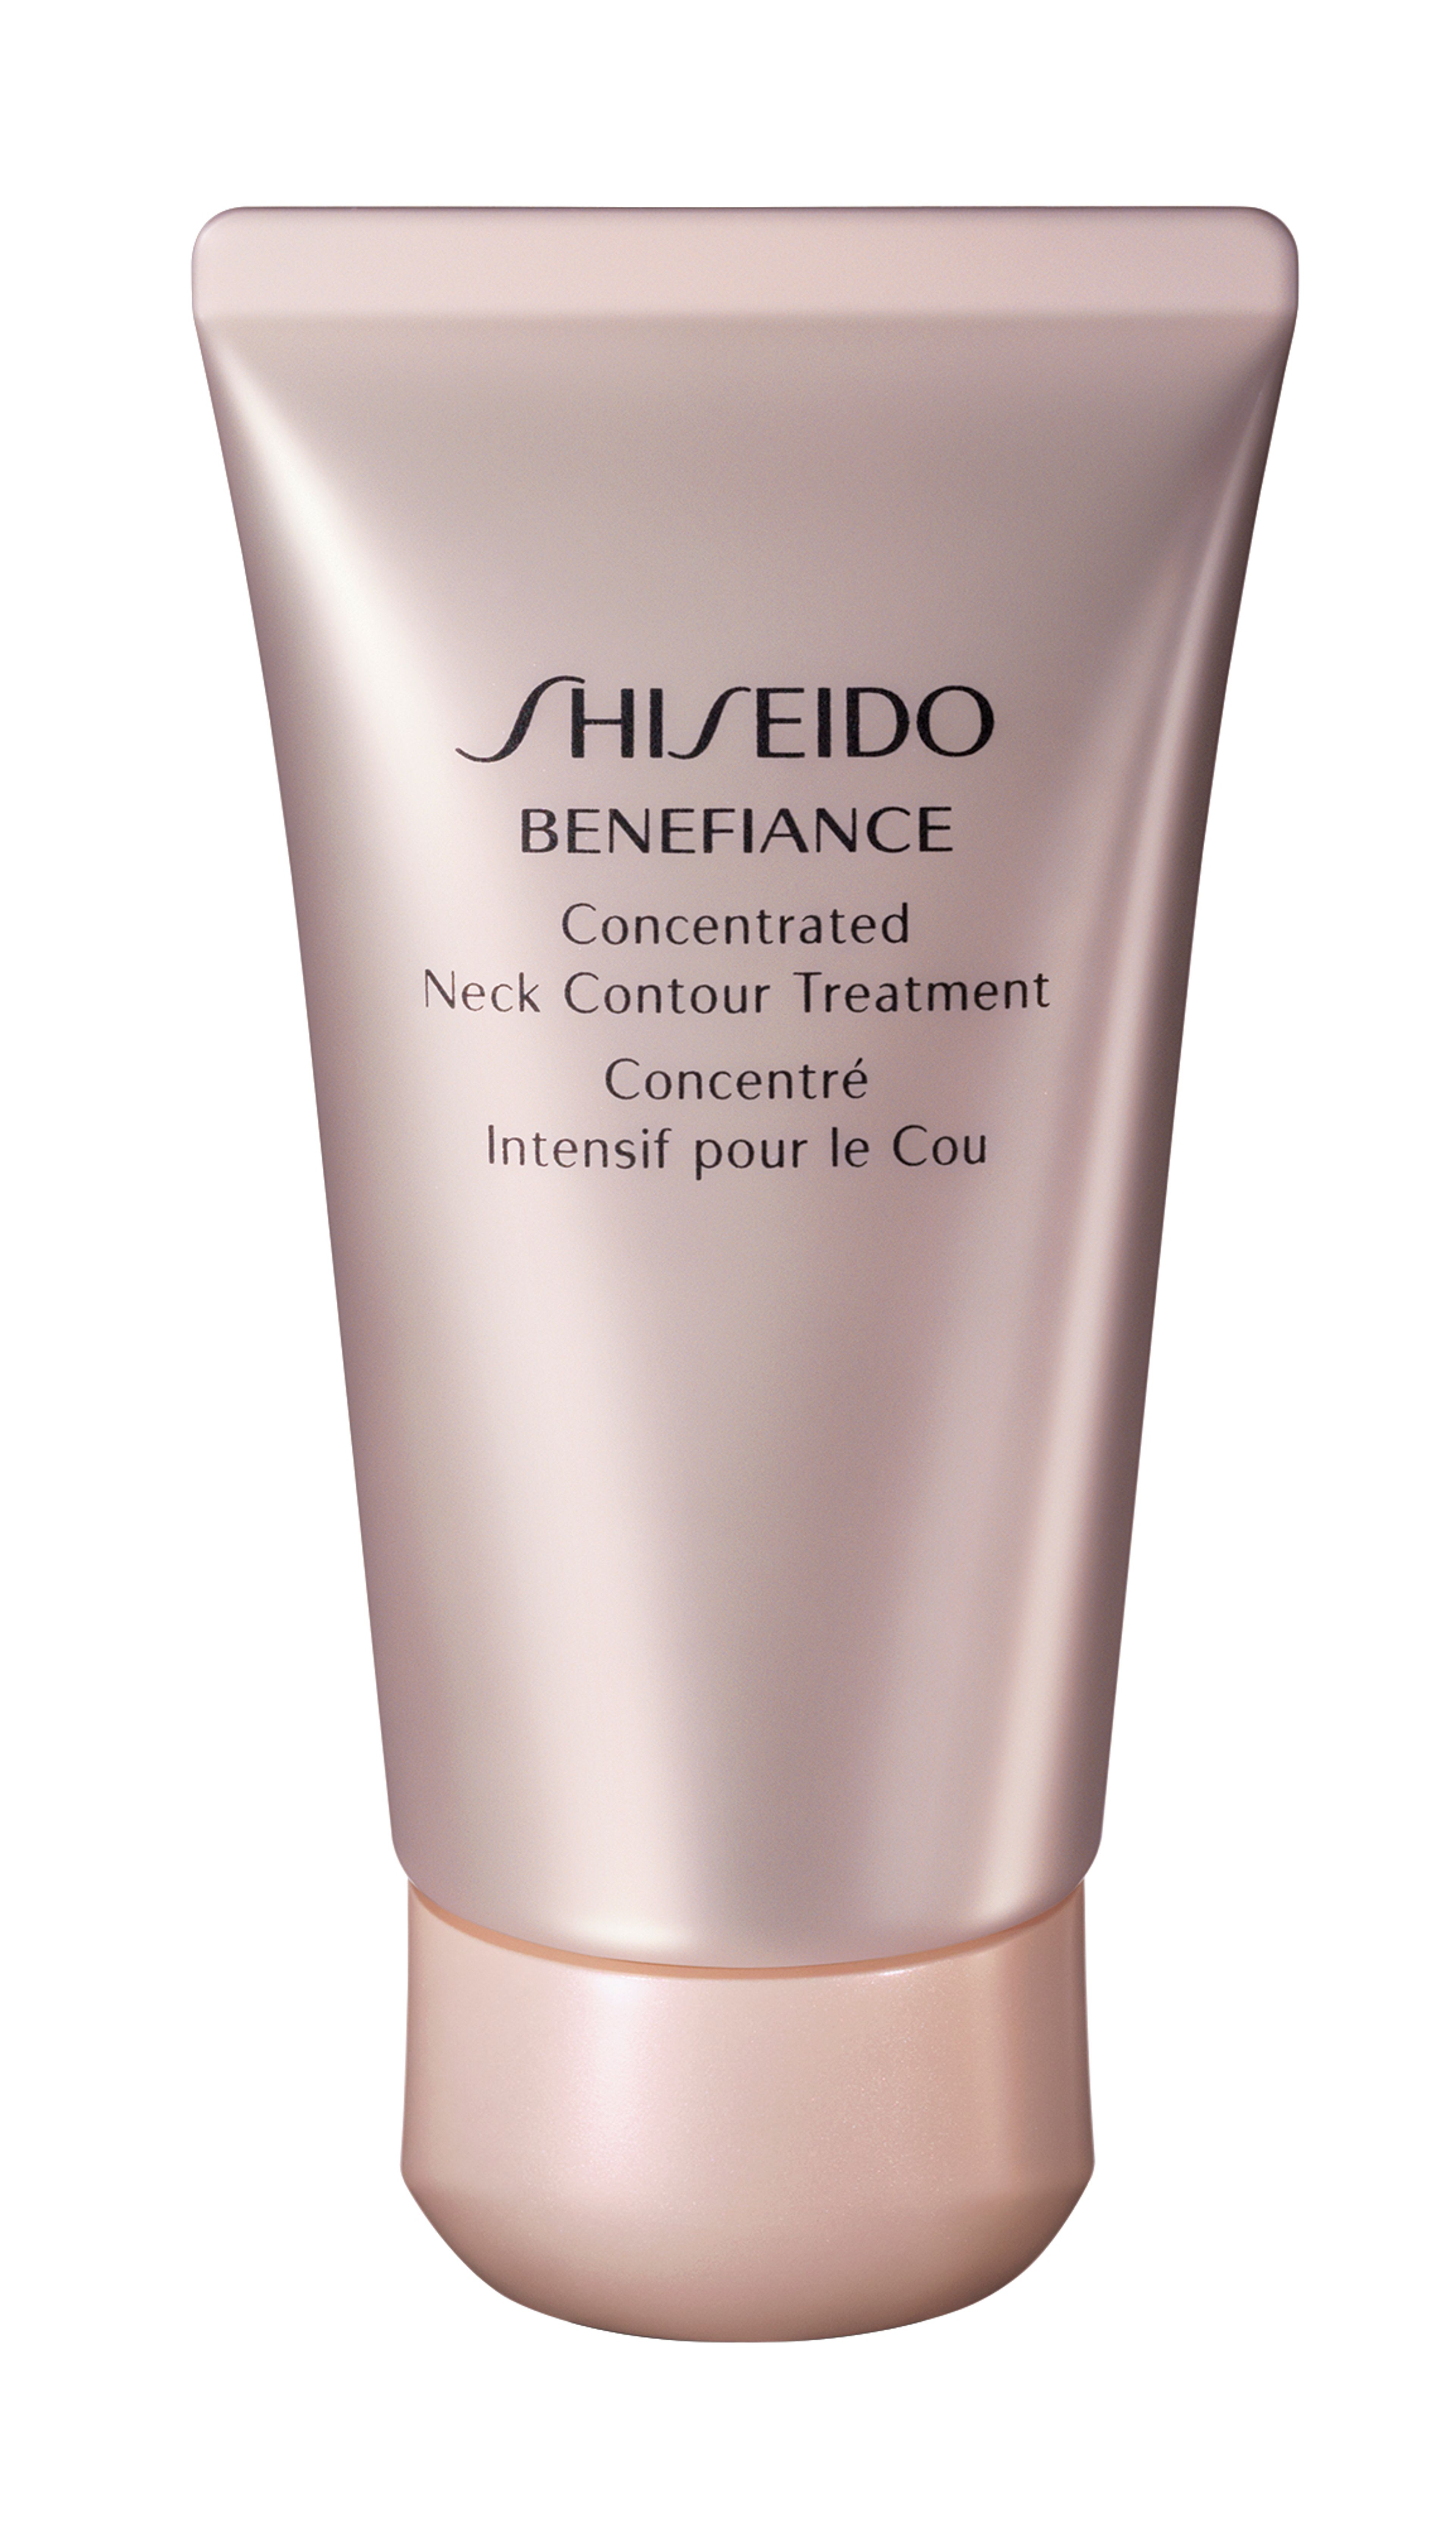 Shiseido Concentrated Neck Contour Treatment 1